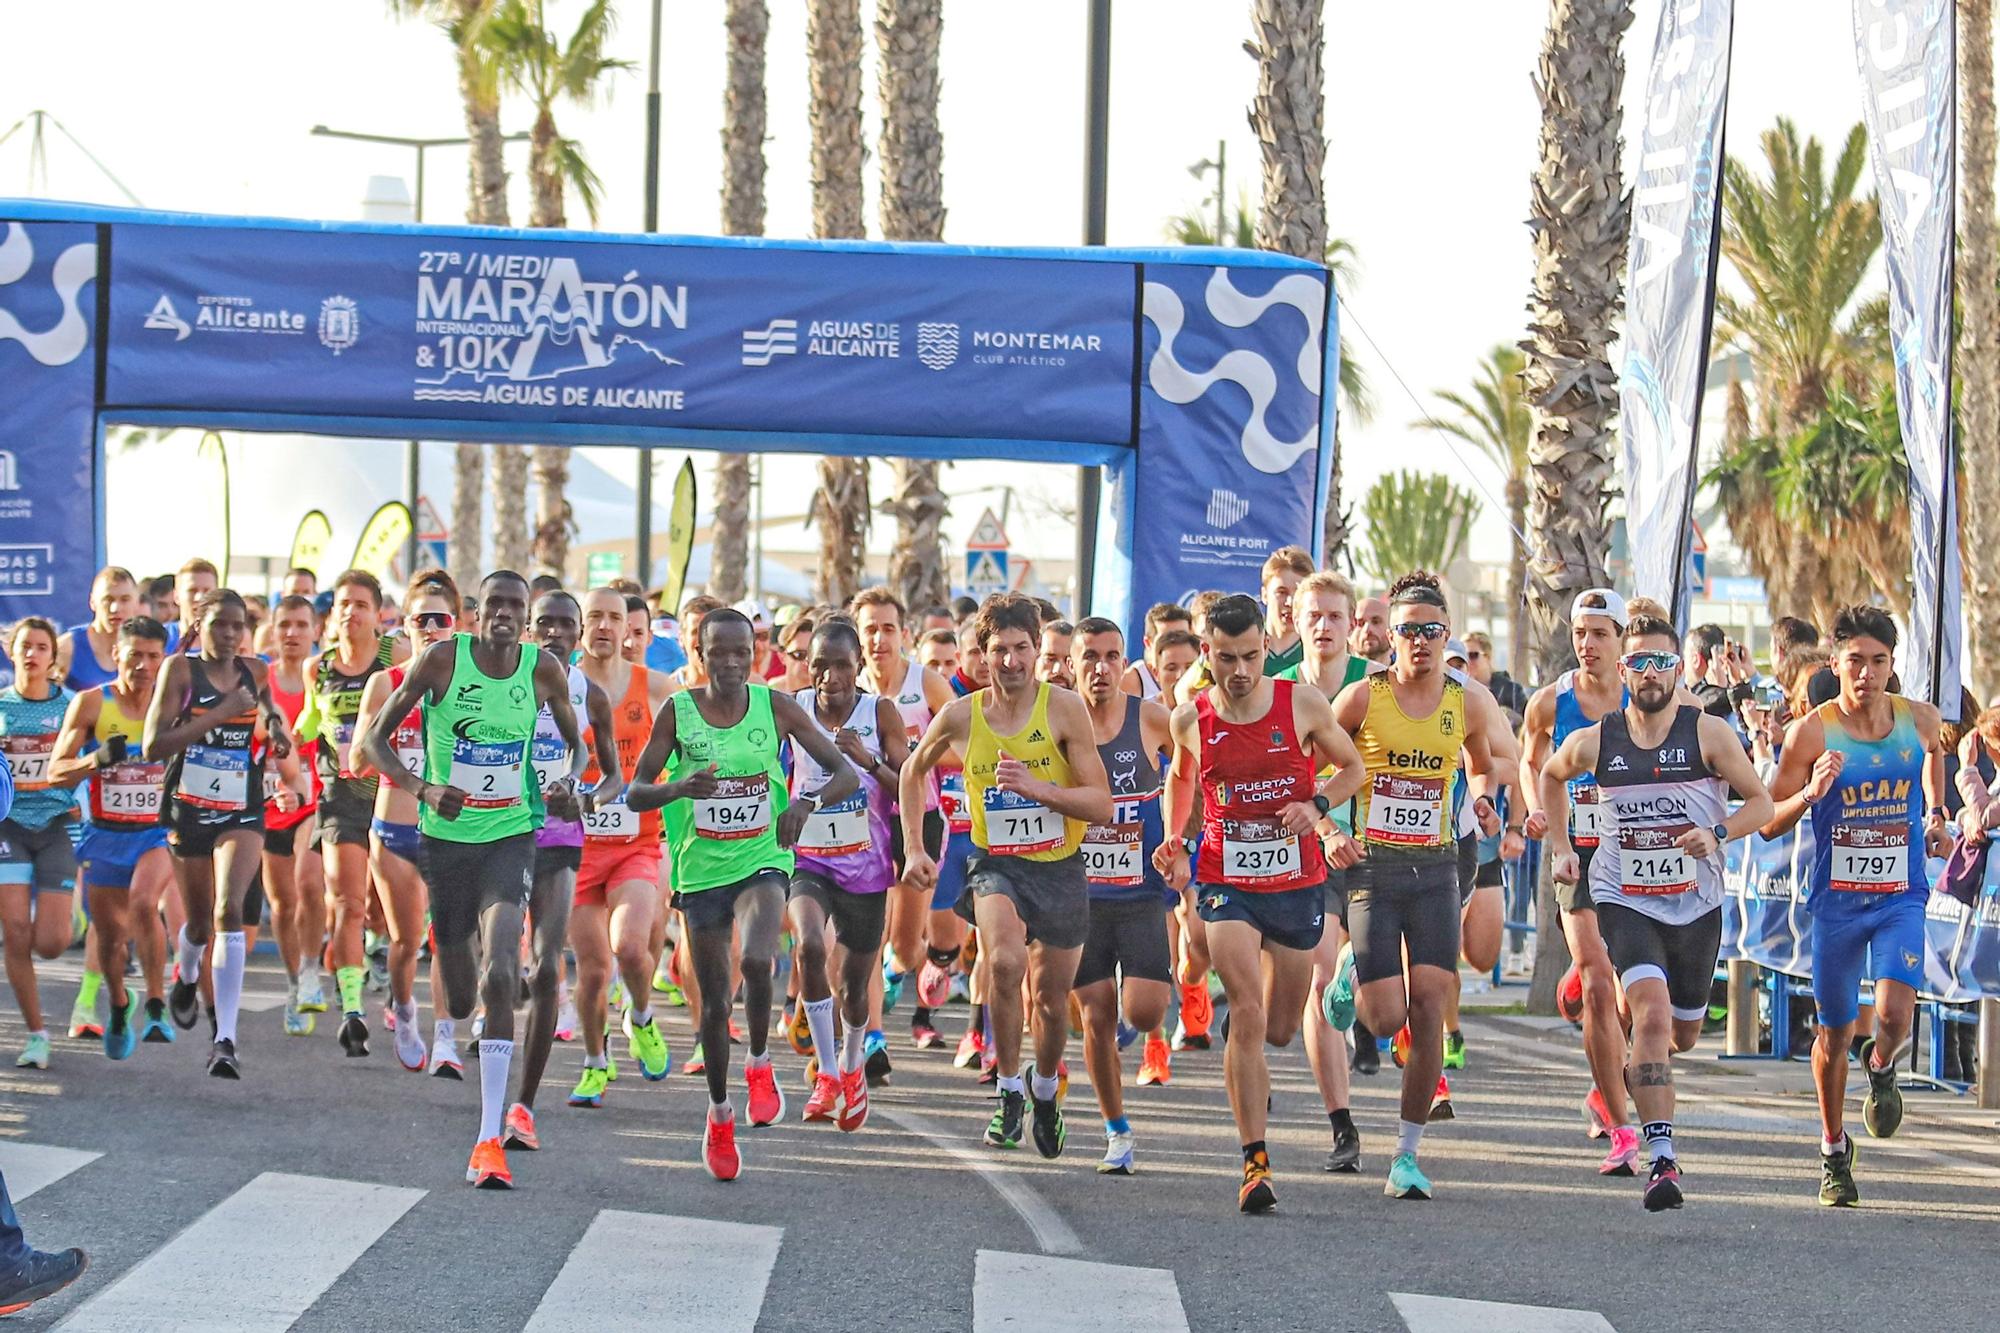 27 Media Maratón Alicante